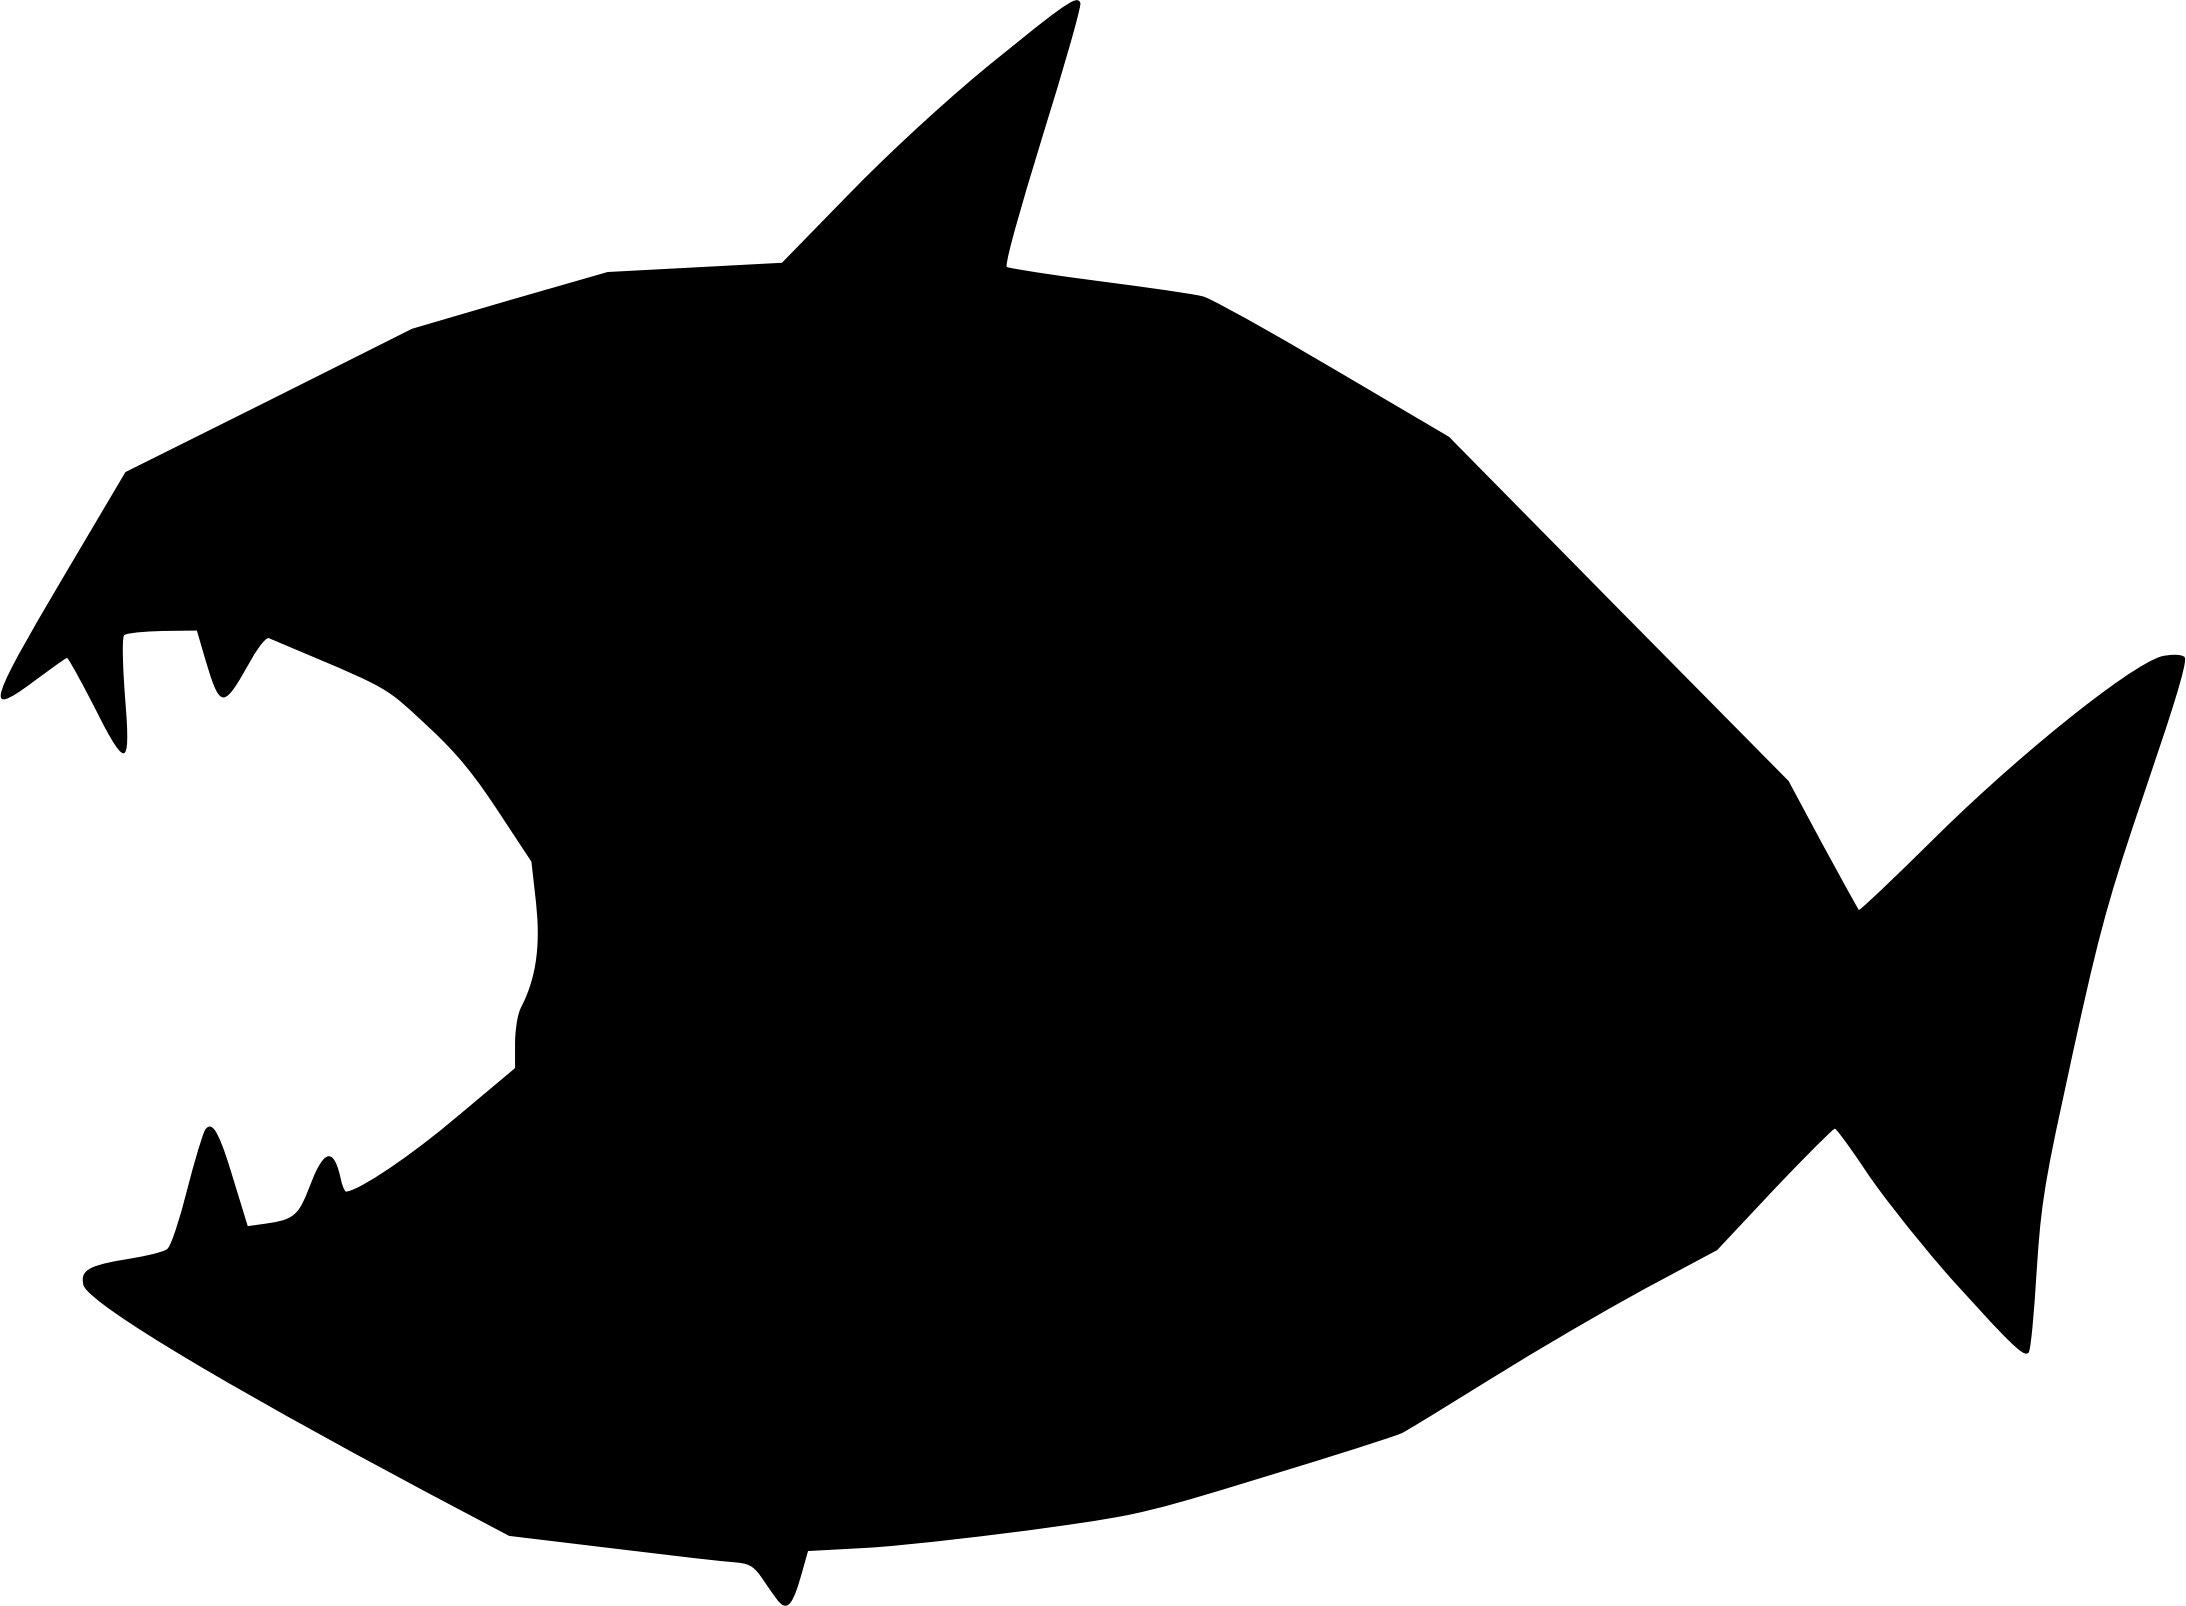 Big Image - Silhouette Piranha (2186x1606)